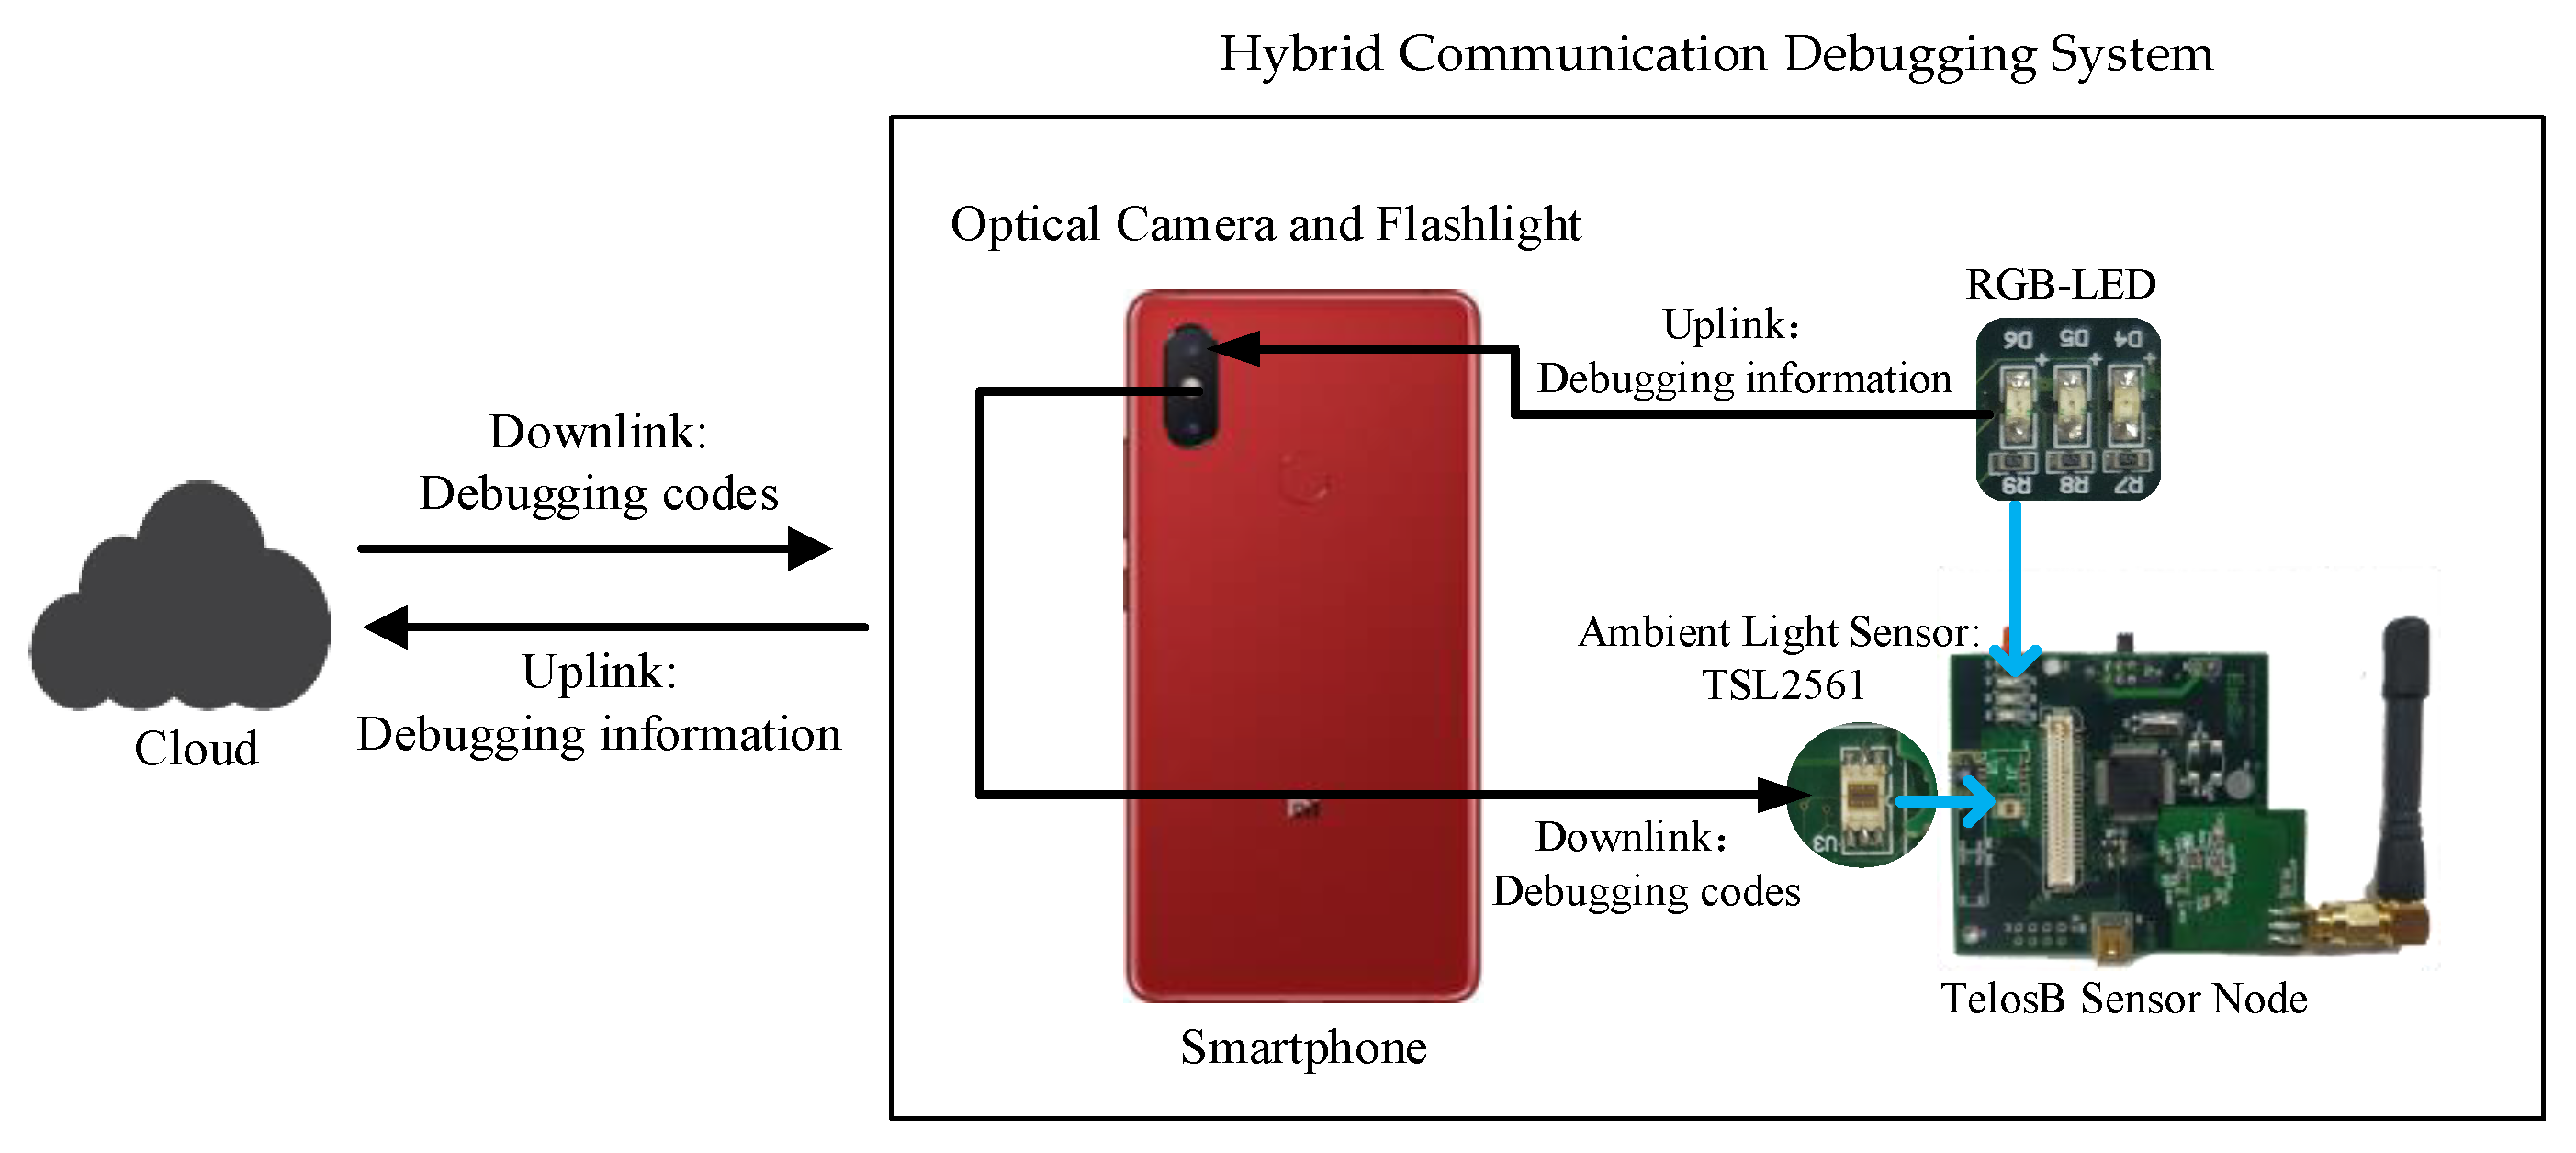 Ambient Light Sensors Ambient Light Sensor Analog Current Out 50 pieces 